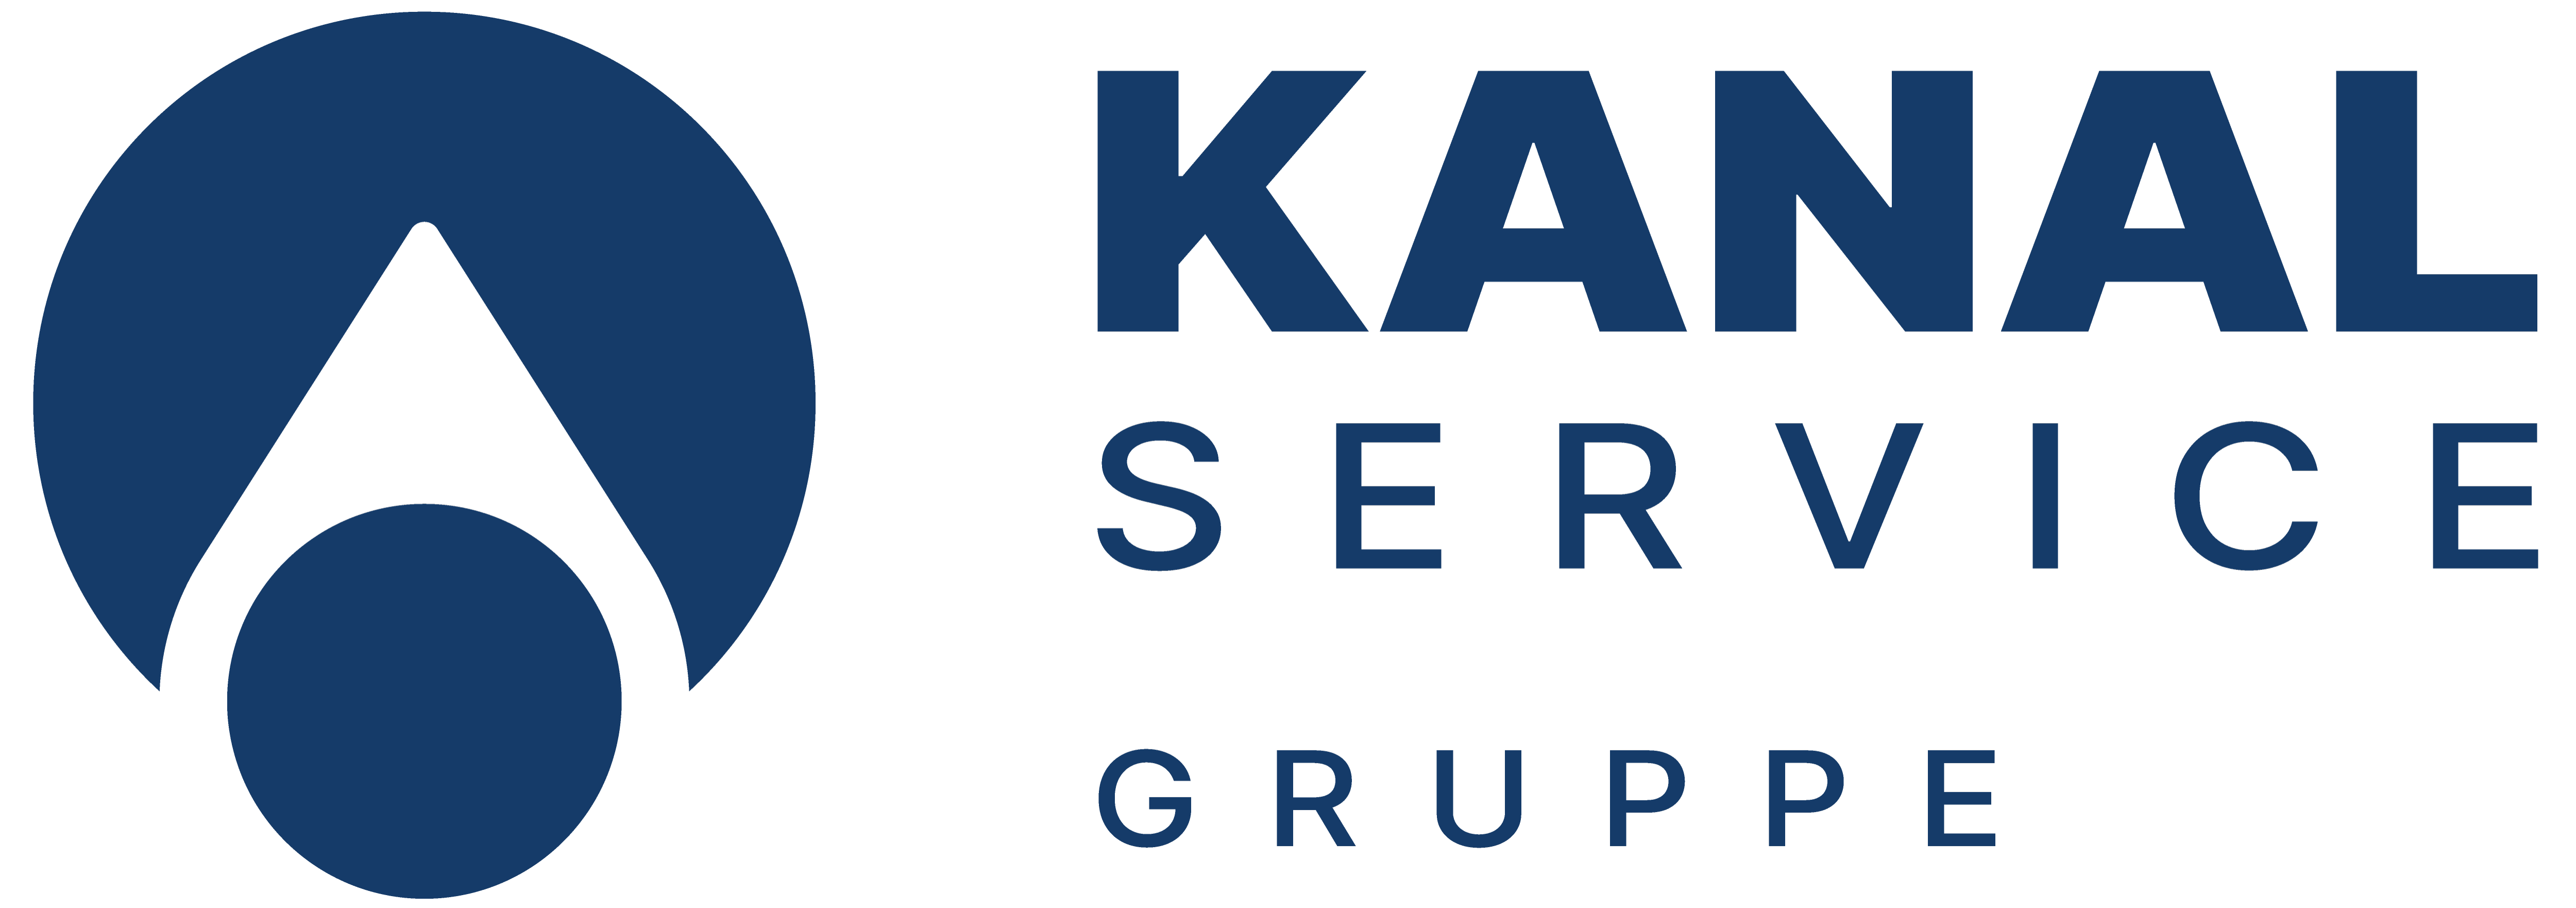 Kanalservicegruppe Logo blau